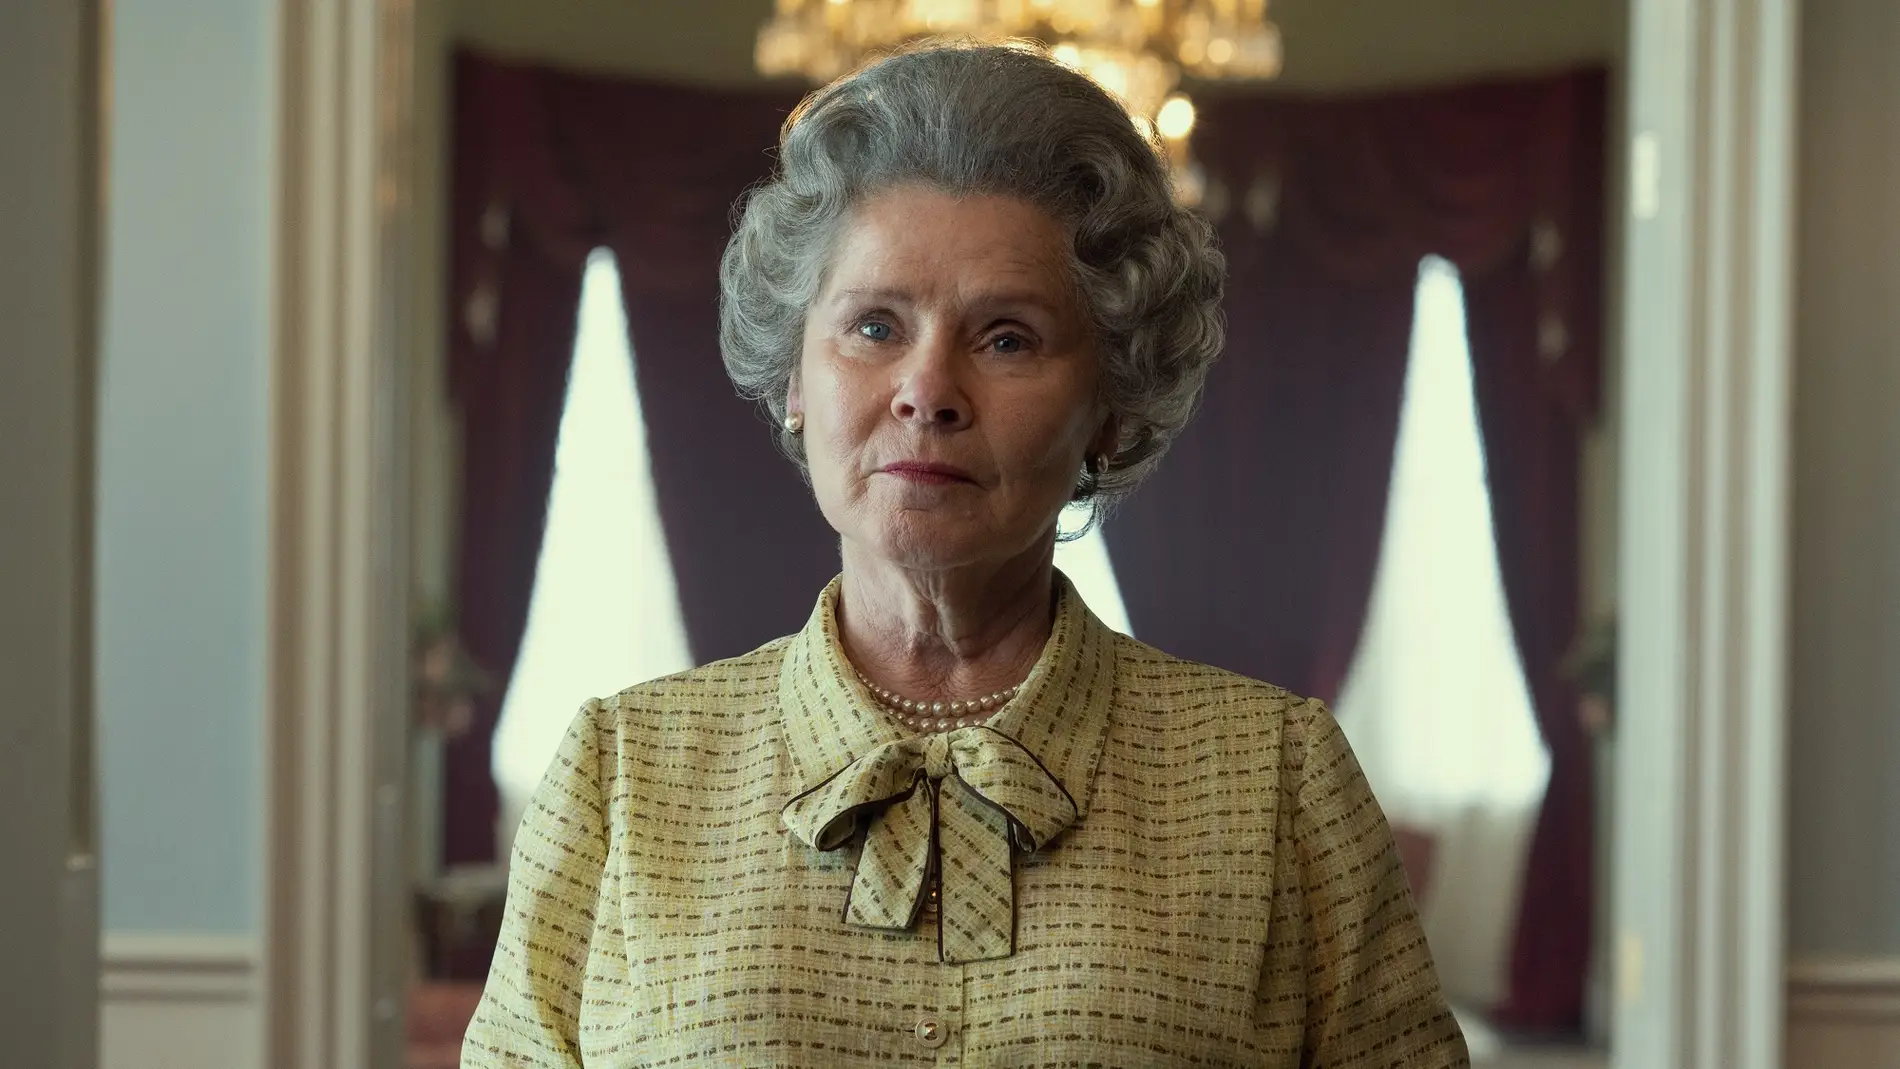 Imelda Staunton como la reina Isabel II en 'The Crown'